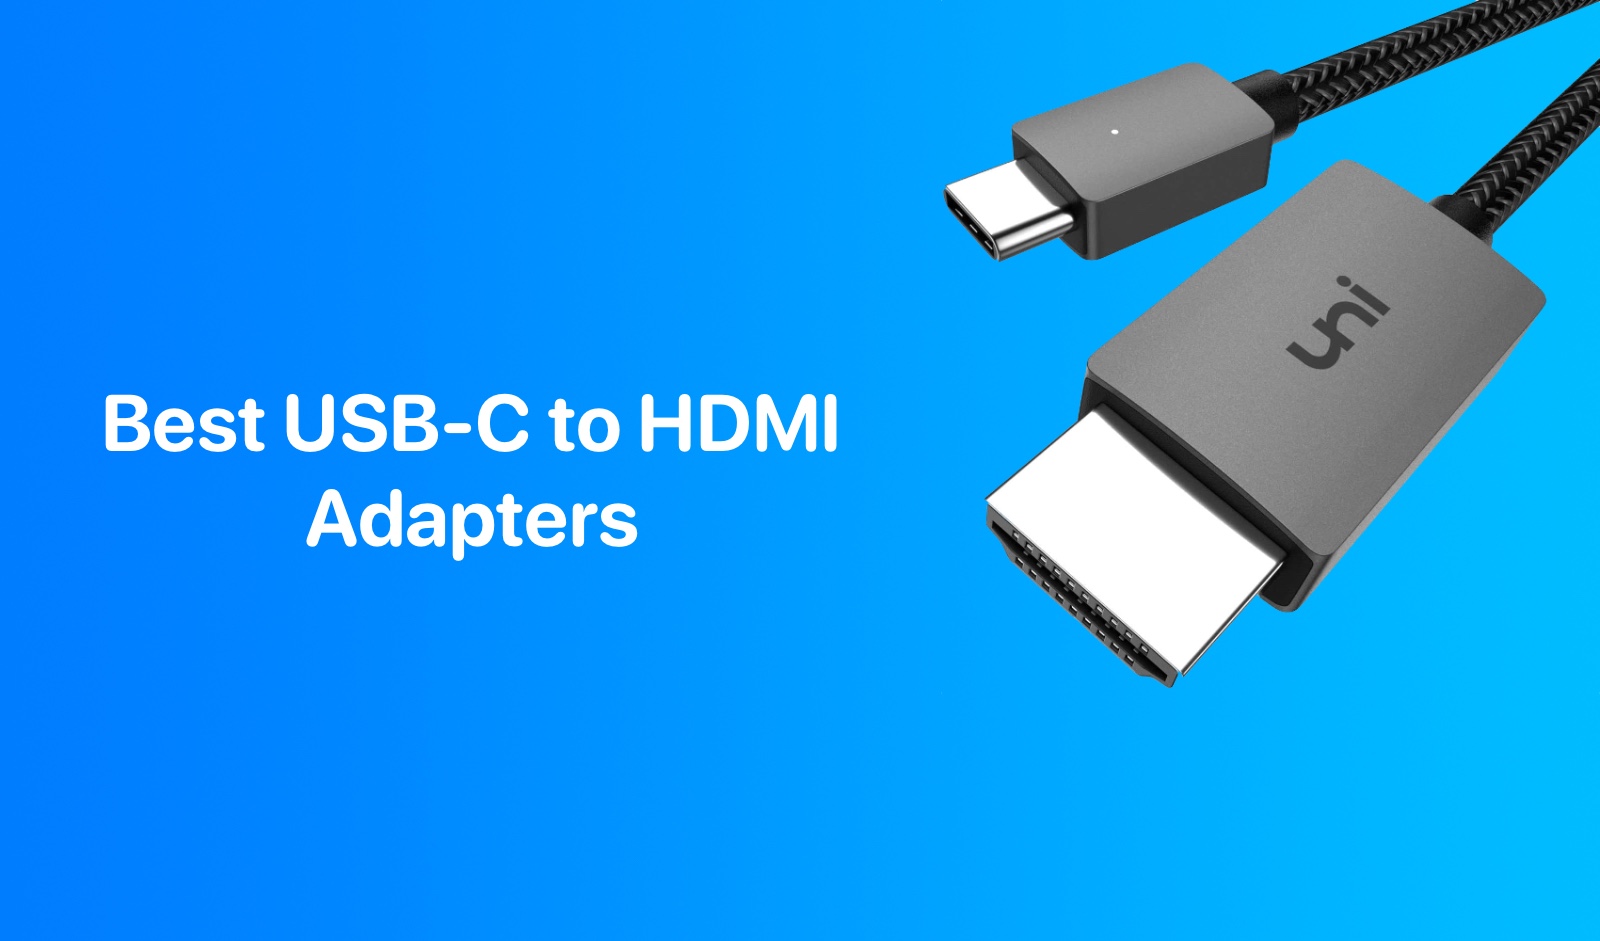 Anker USB C to HDMI Adapter (@60Hz), 310 USB-C (4K HDMI), Aluminum,  Portable, for MacBook Pro, Air, iPad pROPixelbook, XPS, Galaxy, and More